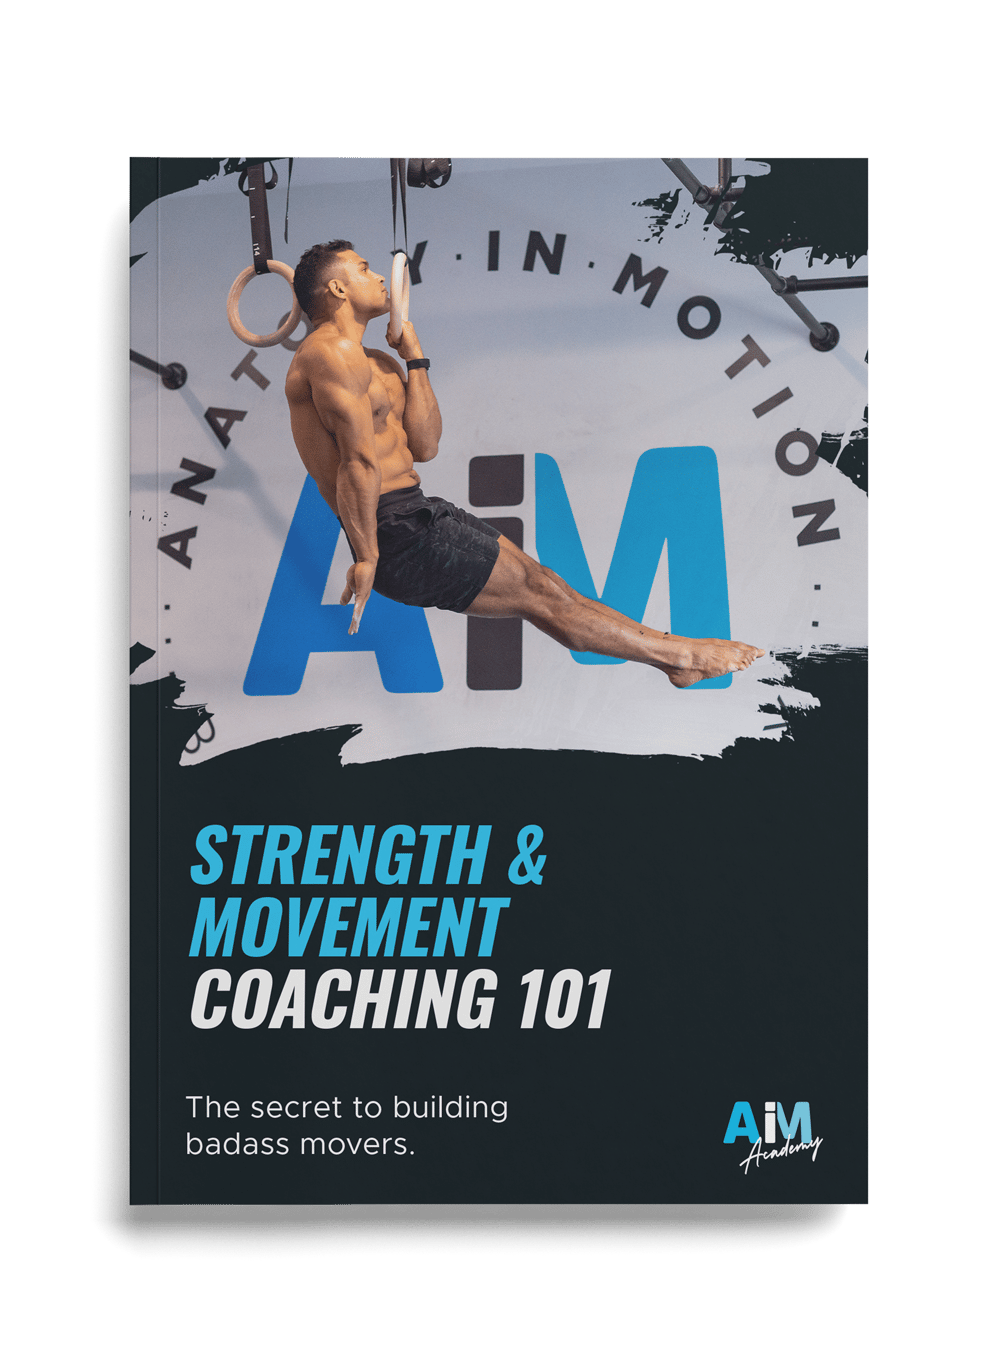 Strength & Movement coaching, be a better coach